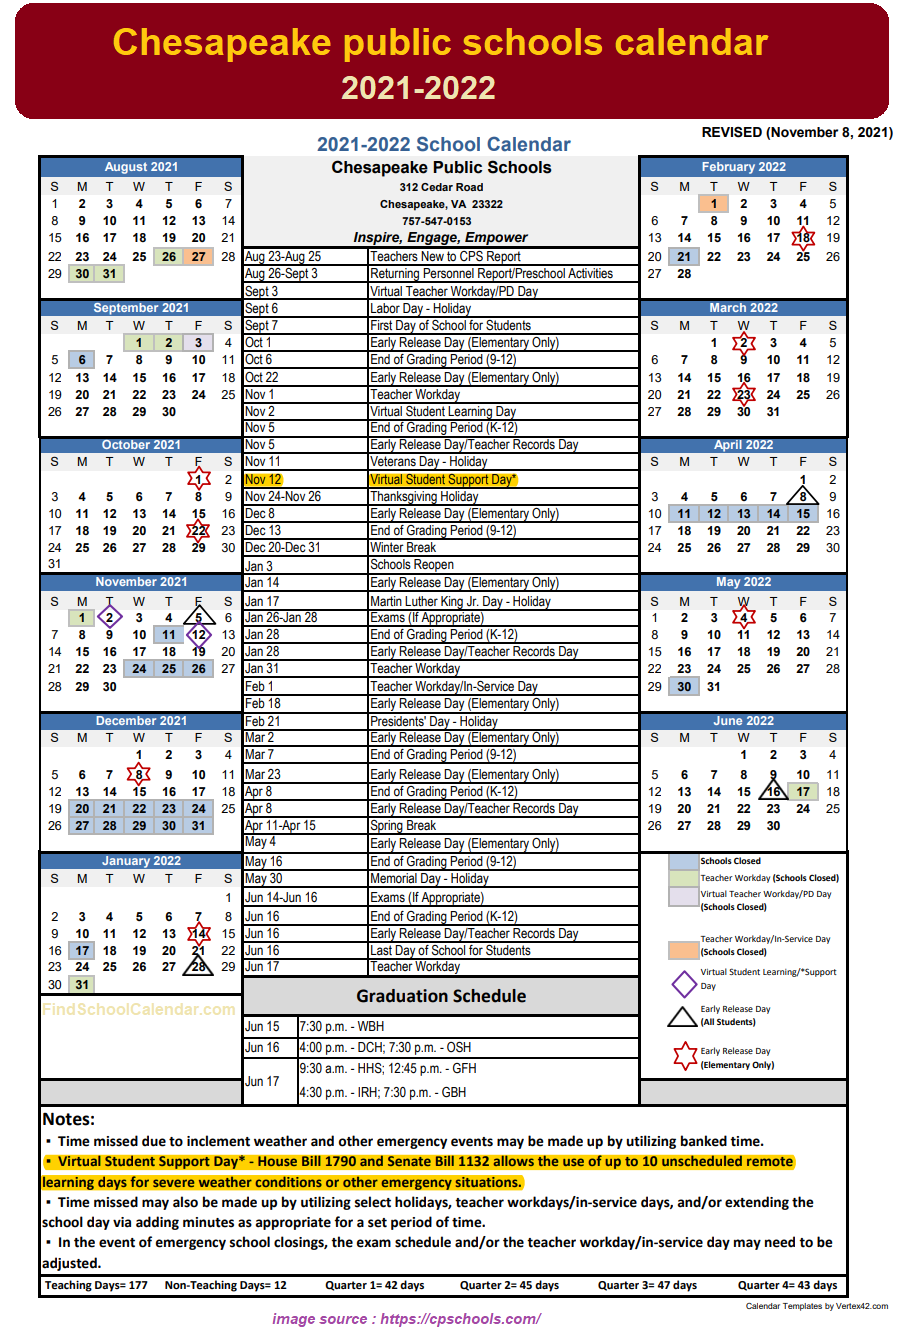 Chesapeake City public schools calendar 21-22